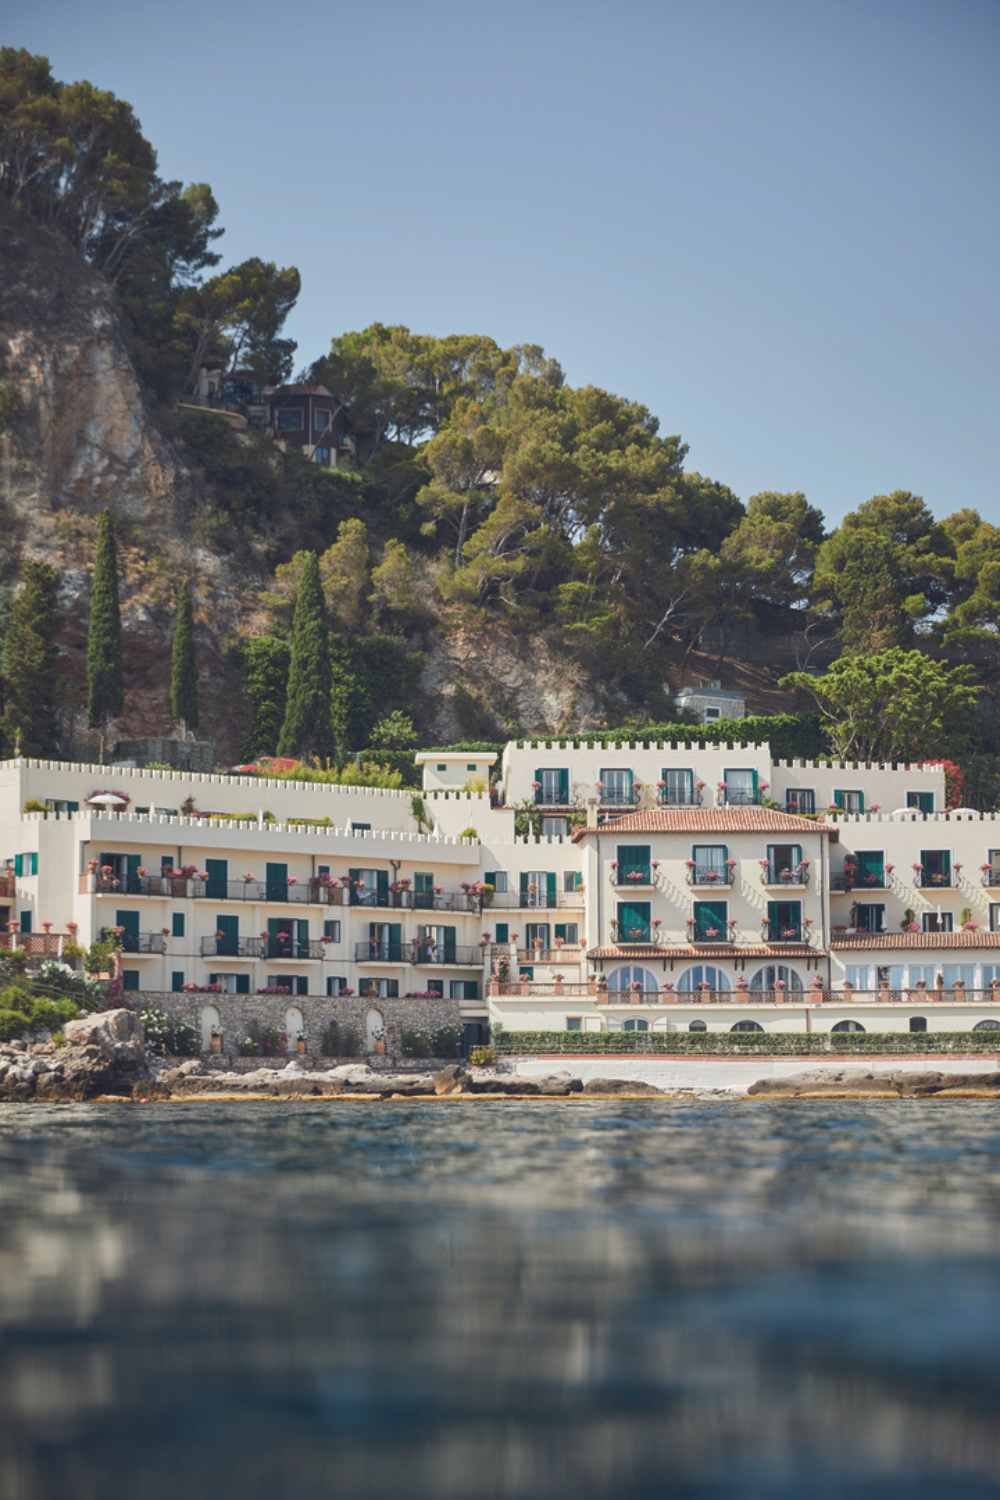 Villa Sant'Andrea Belmond Hotel, Taormina, Sicily